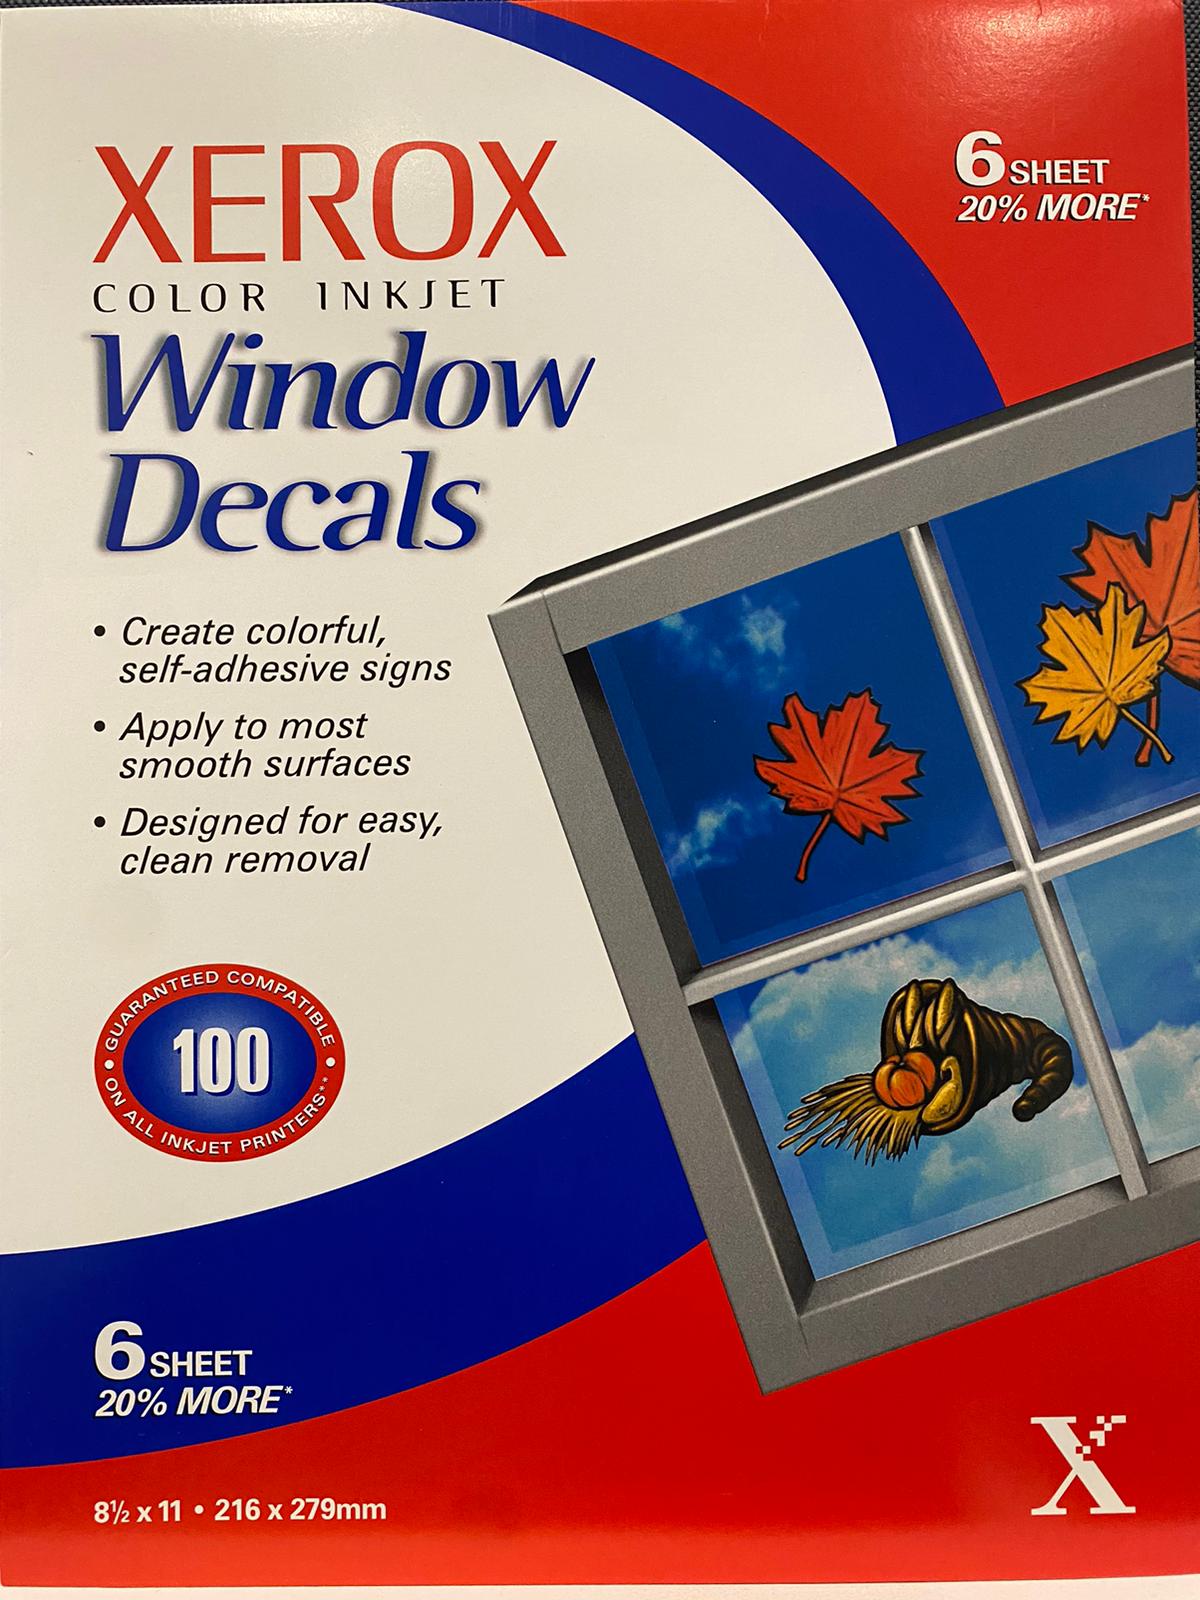 Xerox Color Inkjet Window Decals 6 Sheets Pack 3R5499